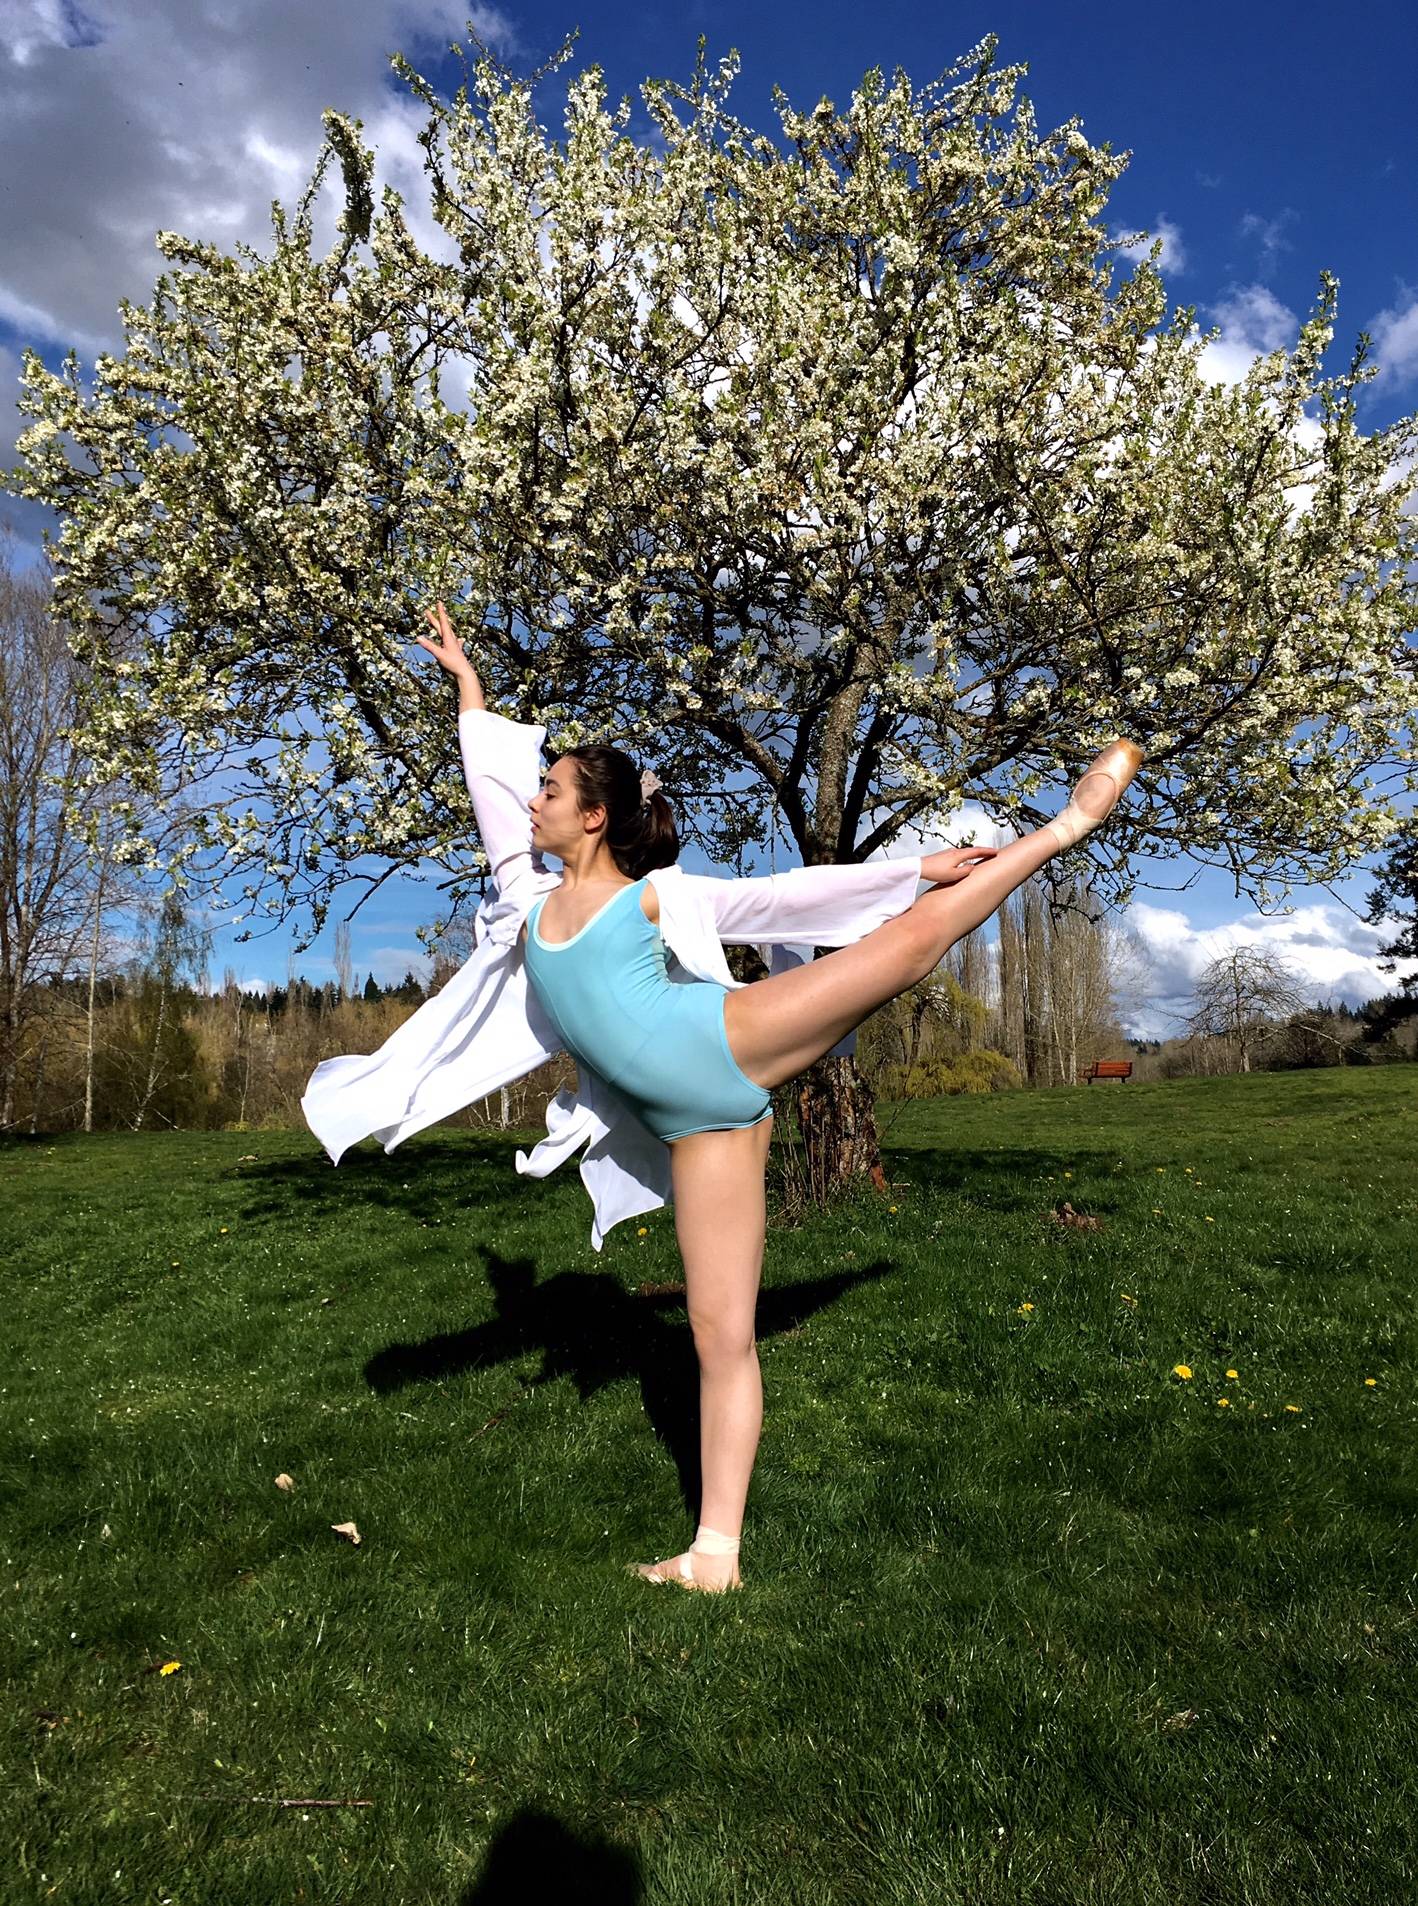 Kirkland student among 22 others to study under legendary ballerina Suzanne Farrell